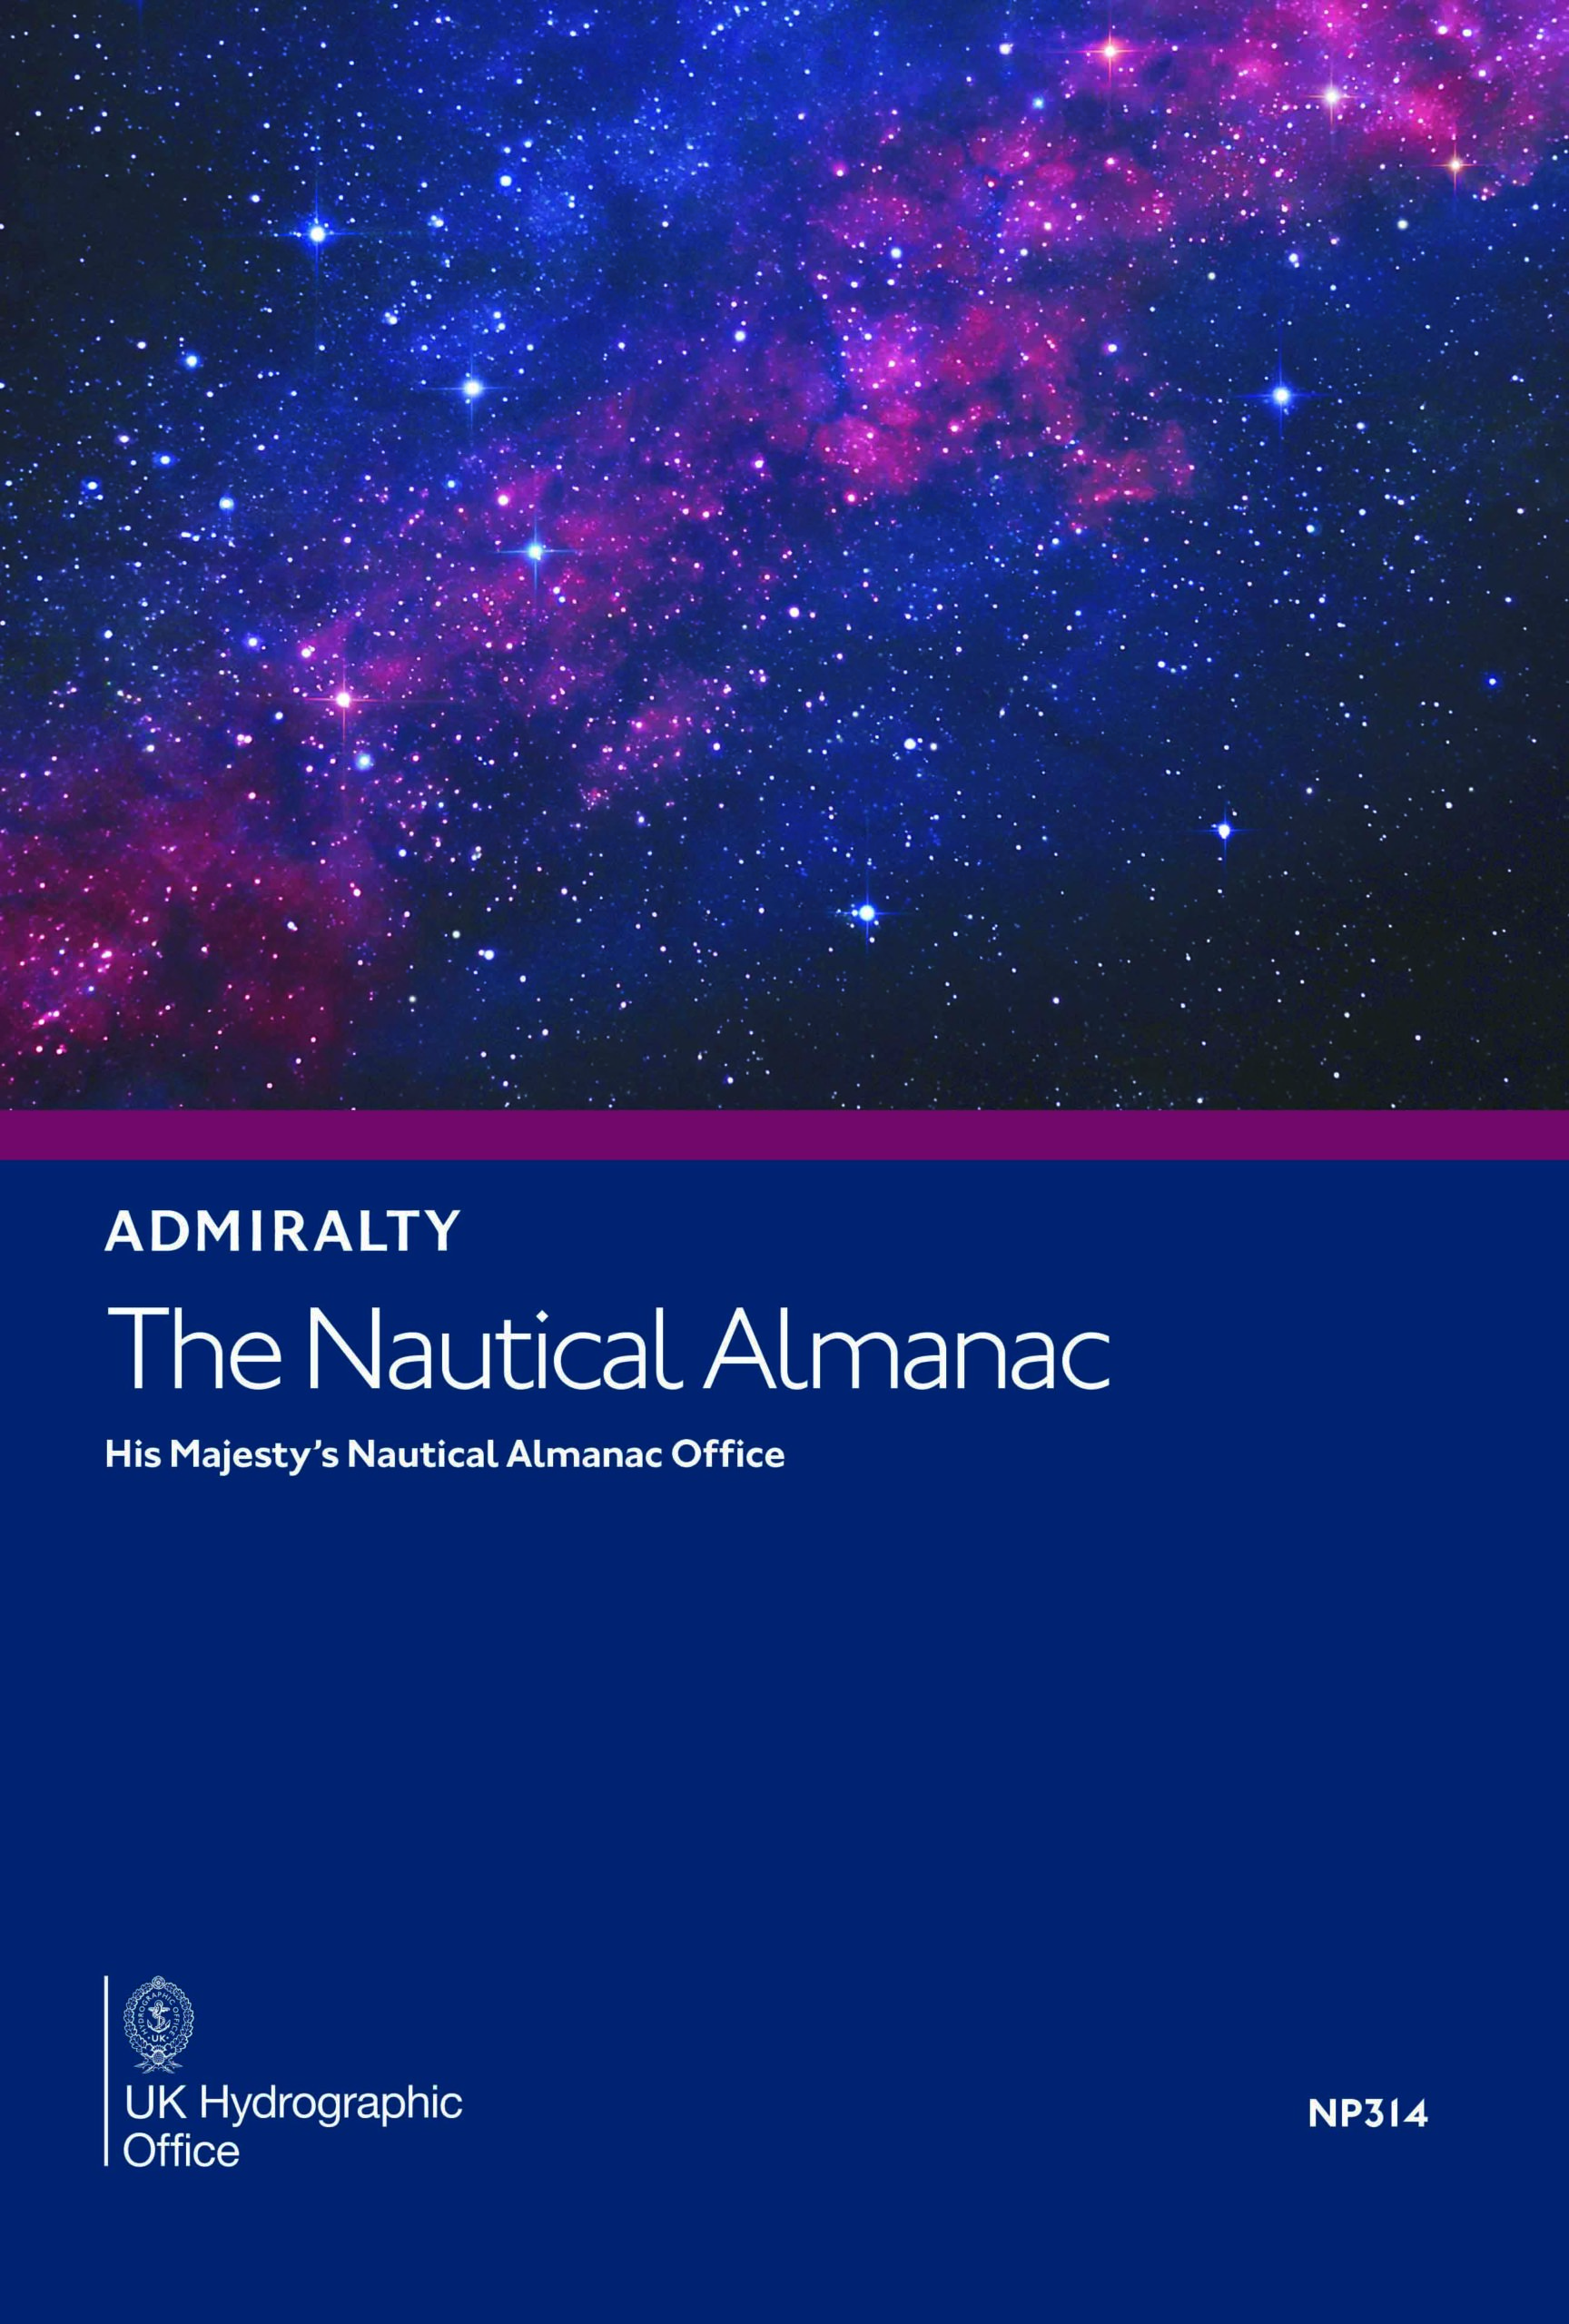 NP314-25 Admiralty The Nautical Almanac